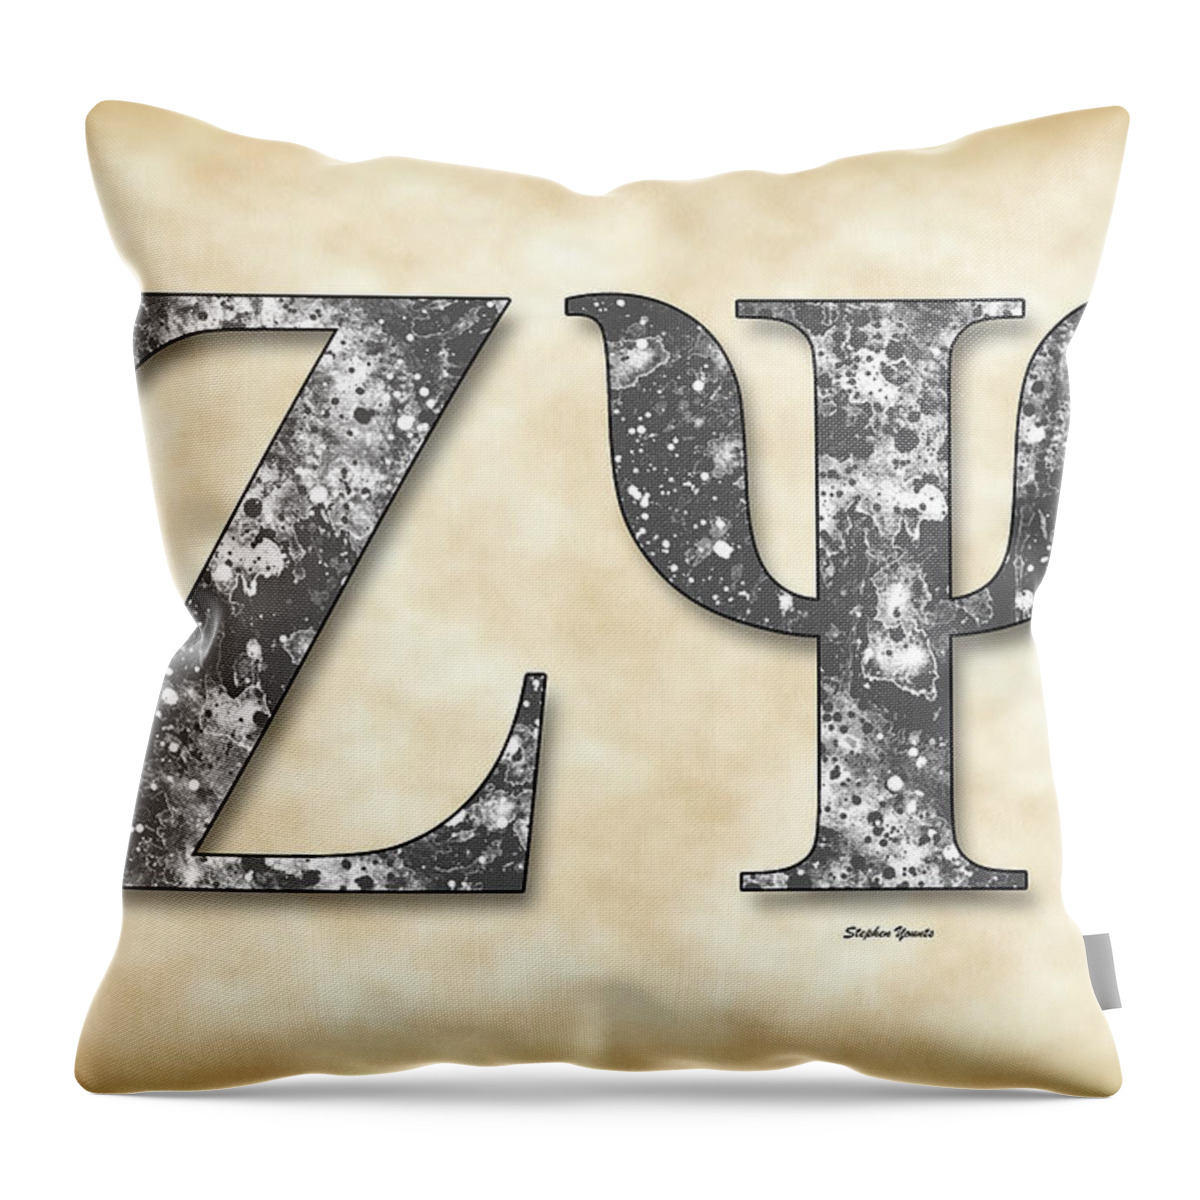 Zeta Psi Throw Pillow featuring the digital art Zeta Psi - Parchment by Stephen Younts